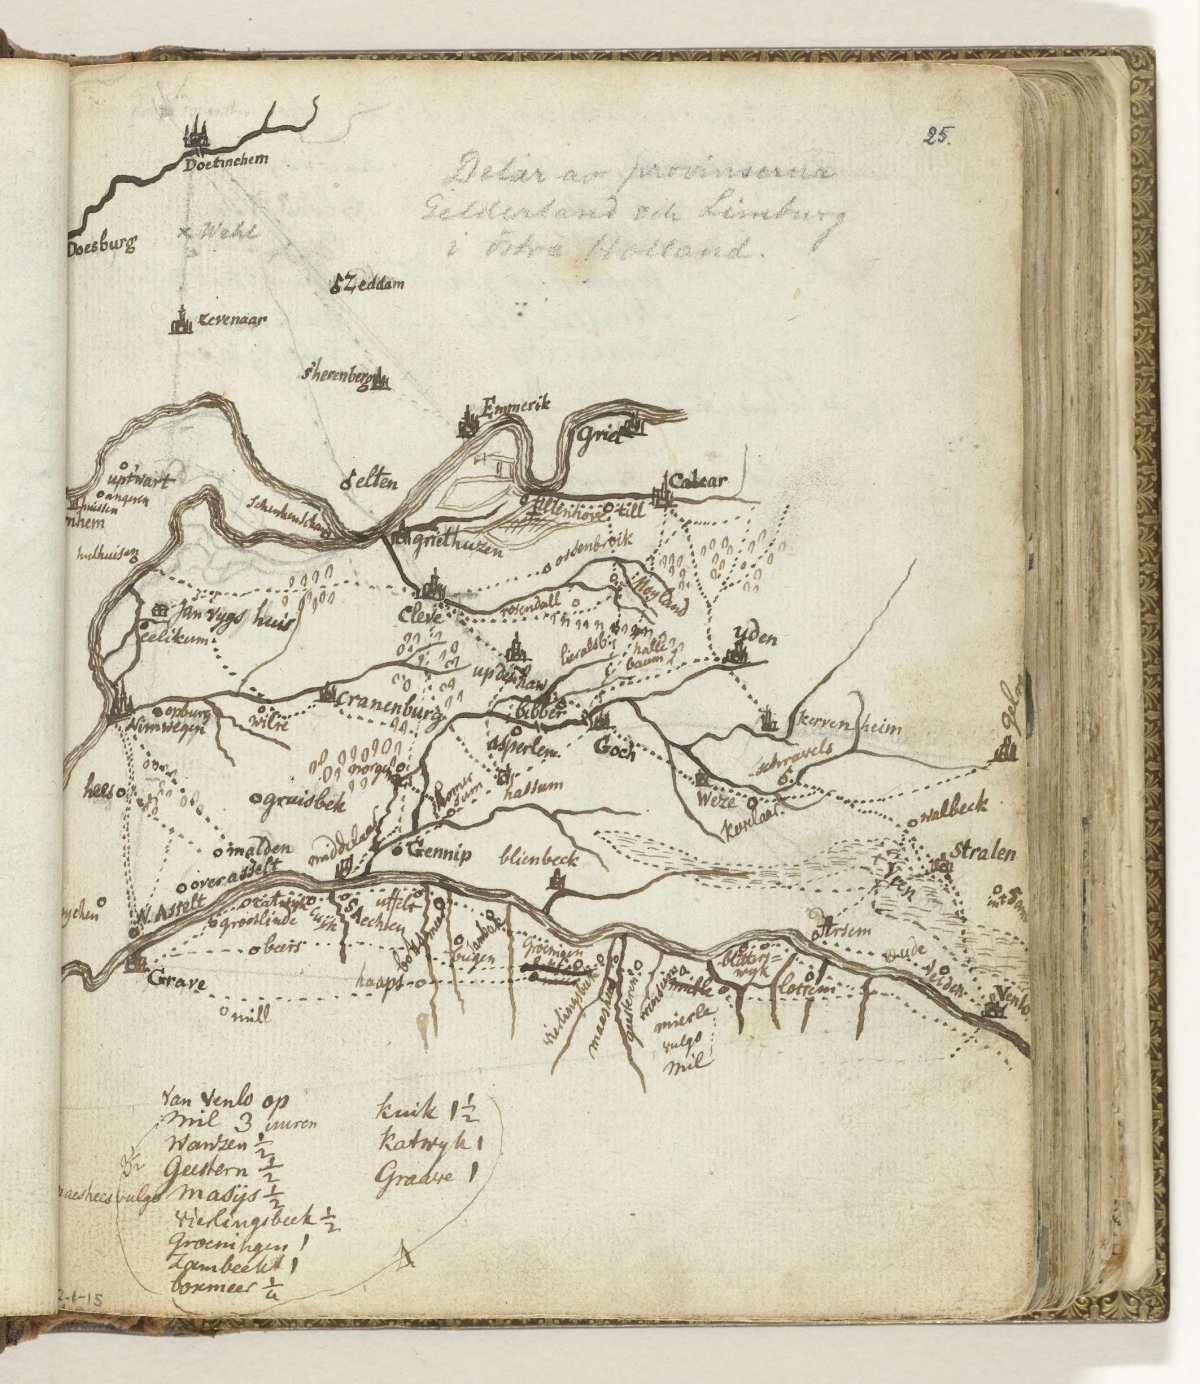 Map of the region between Doetinchem and Venlo, Jan Brandes, 1770 - 1778